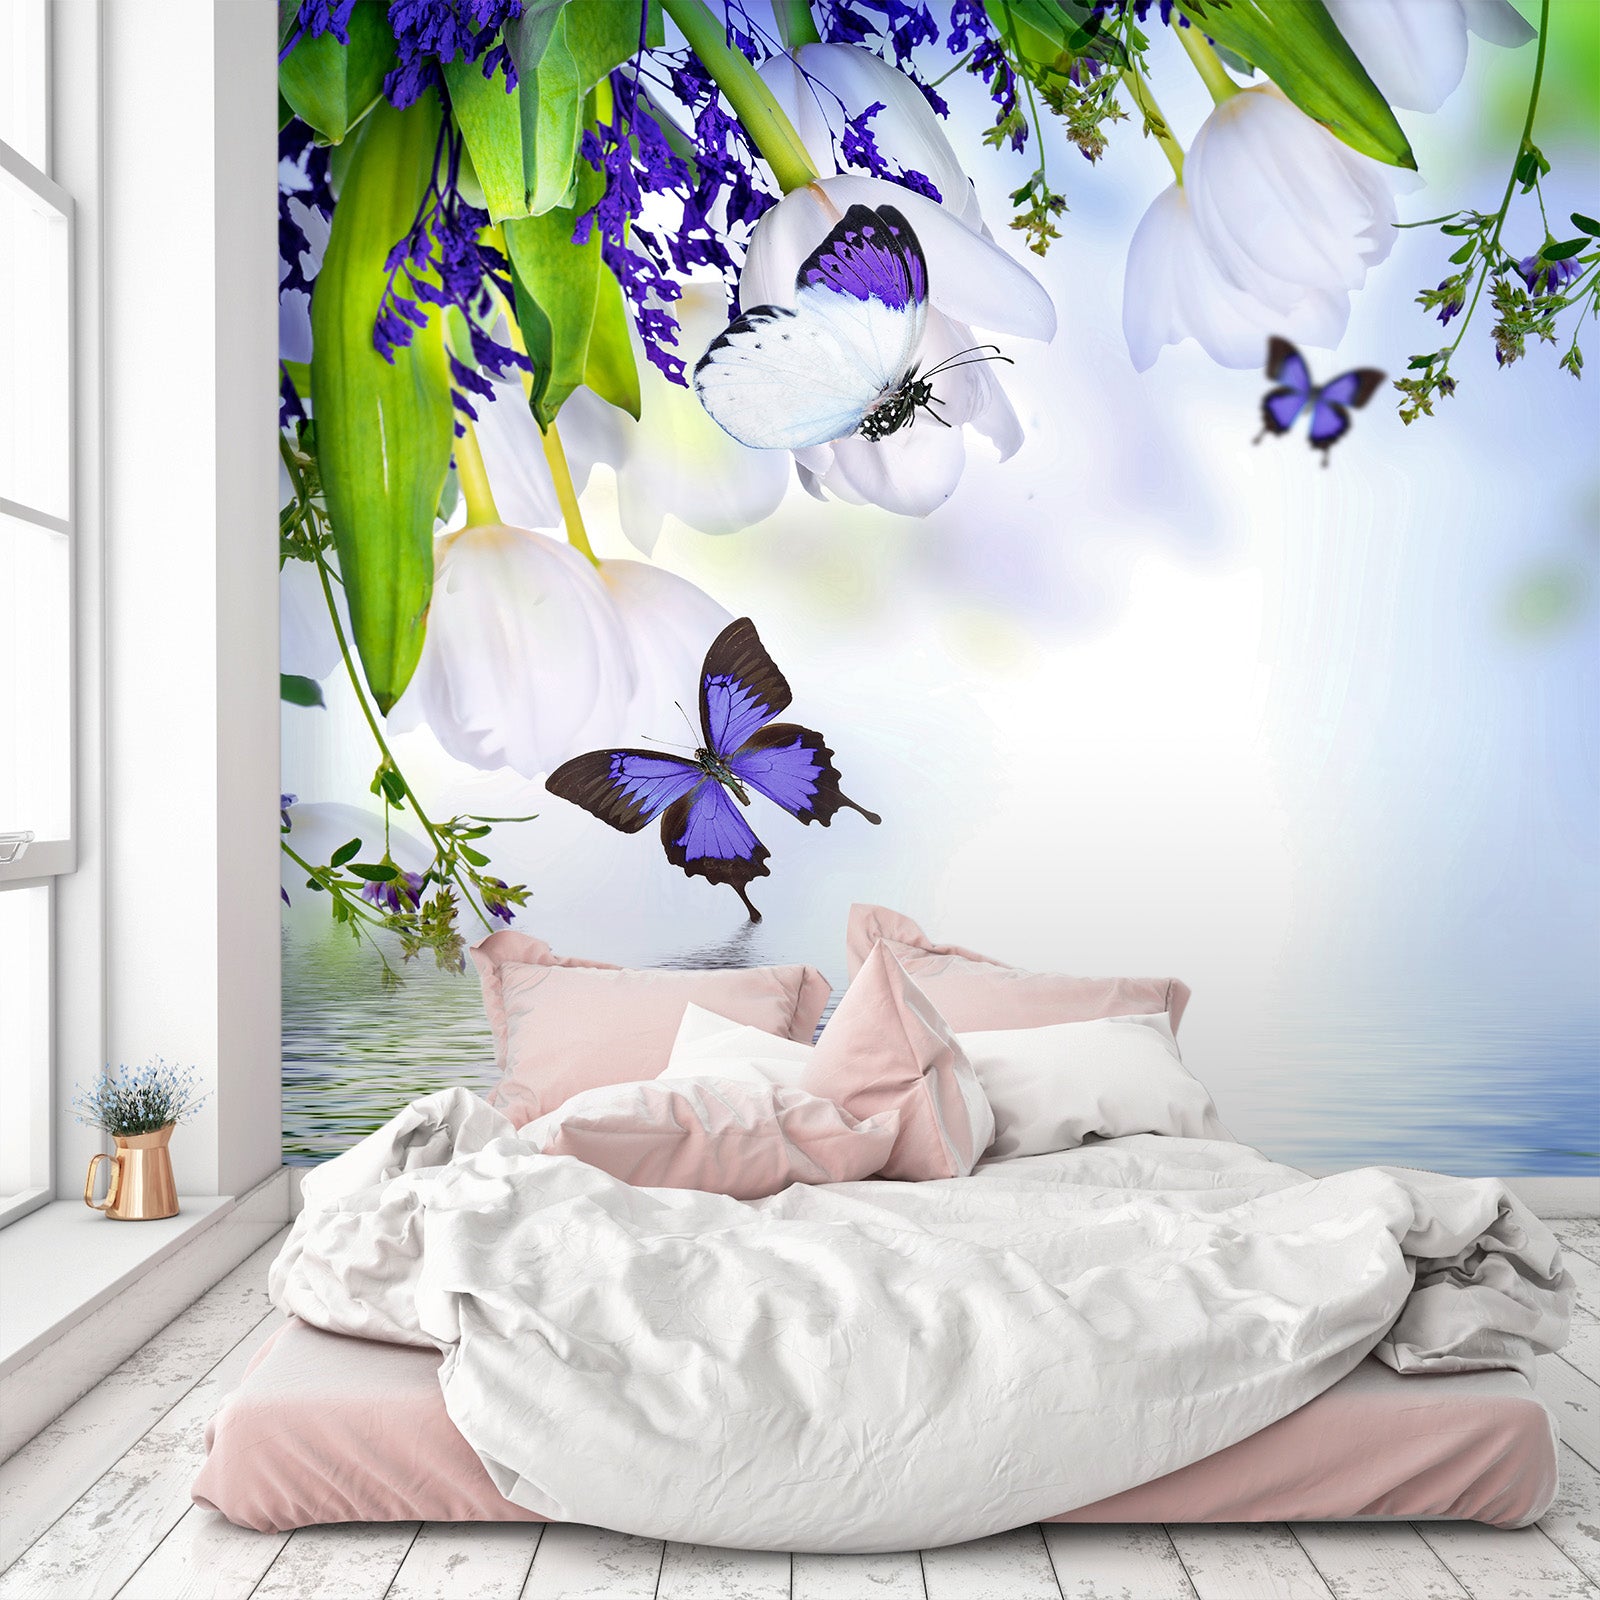 3D Purple Butterfly 391 Wall Murals